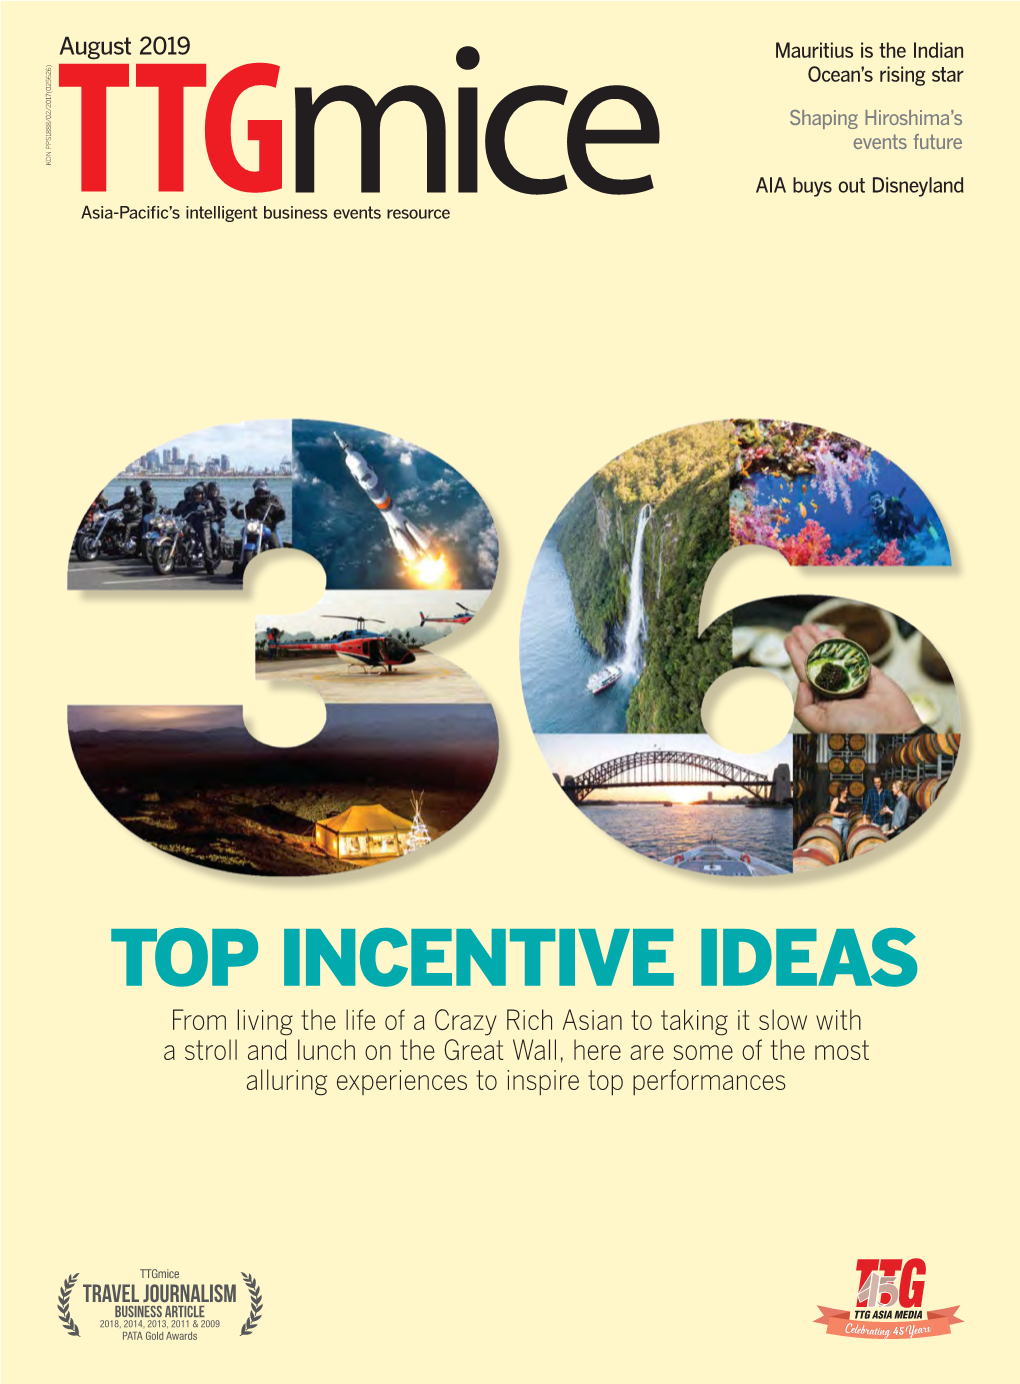 Top Incentive Ideas